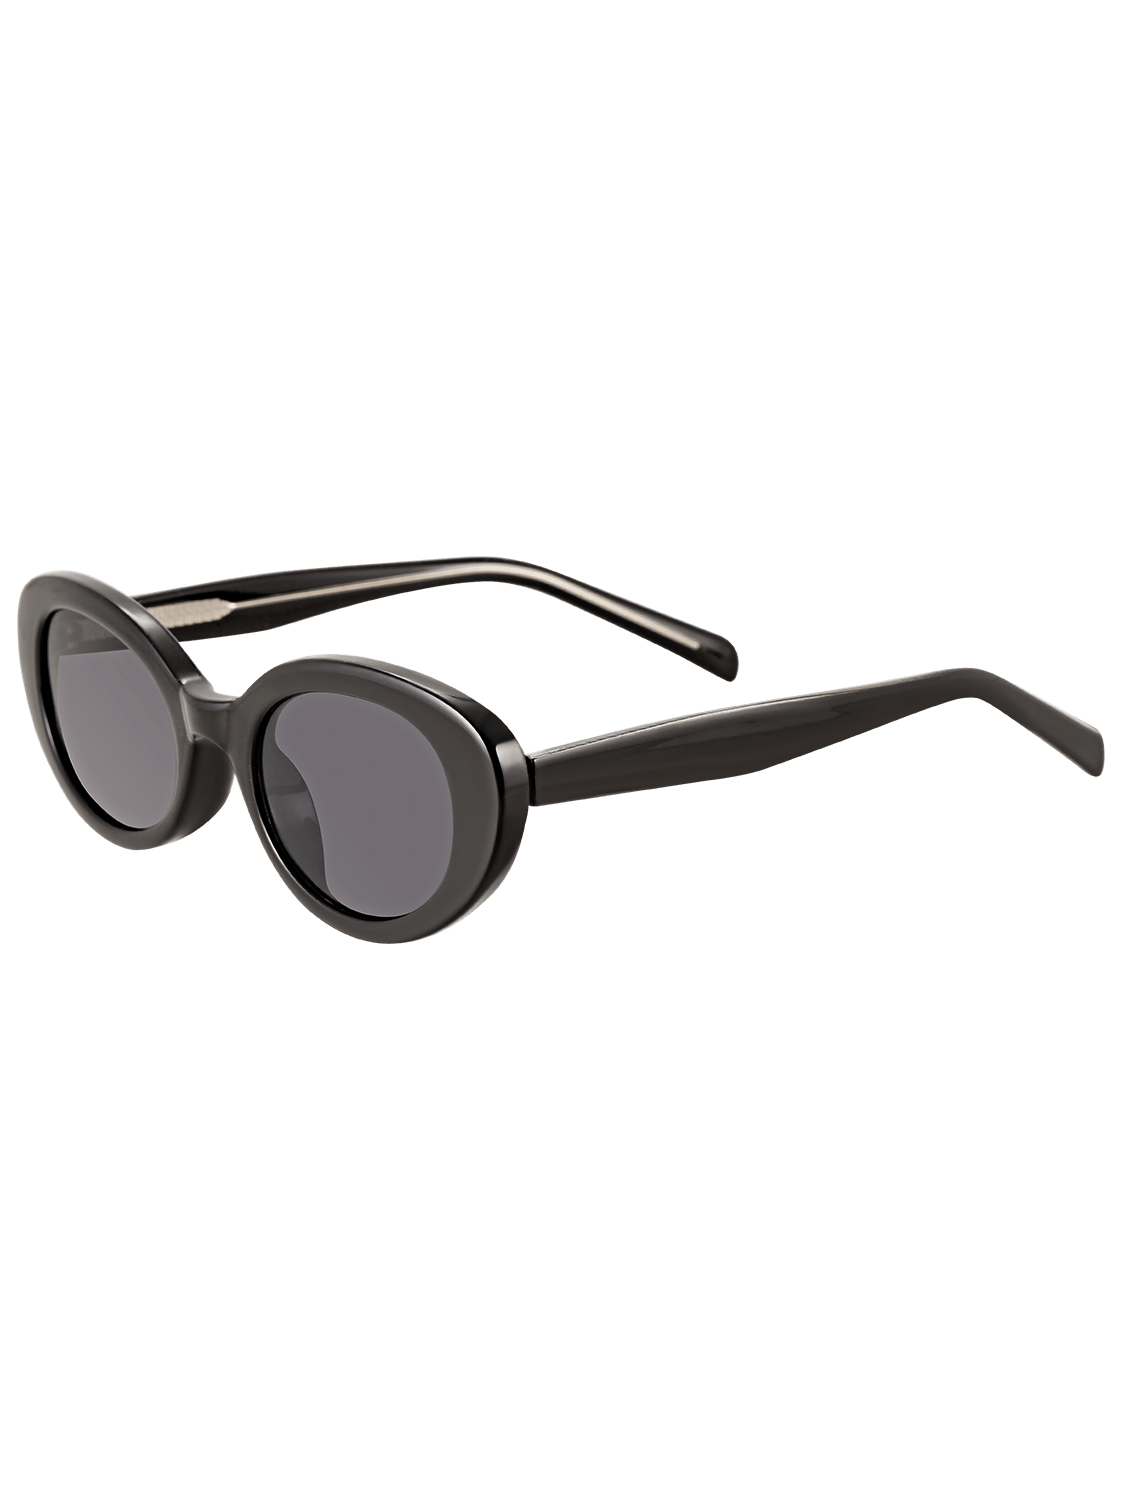 Classic black almond eye shaped sunglasses